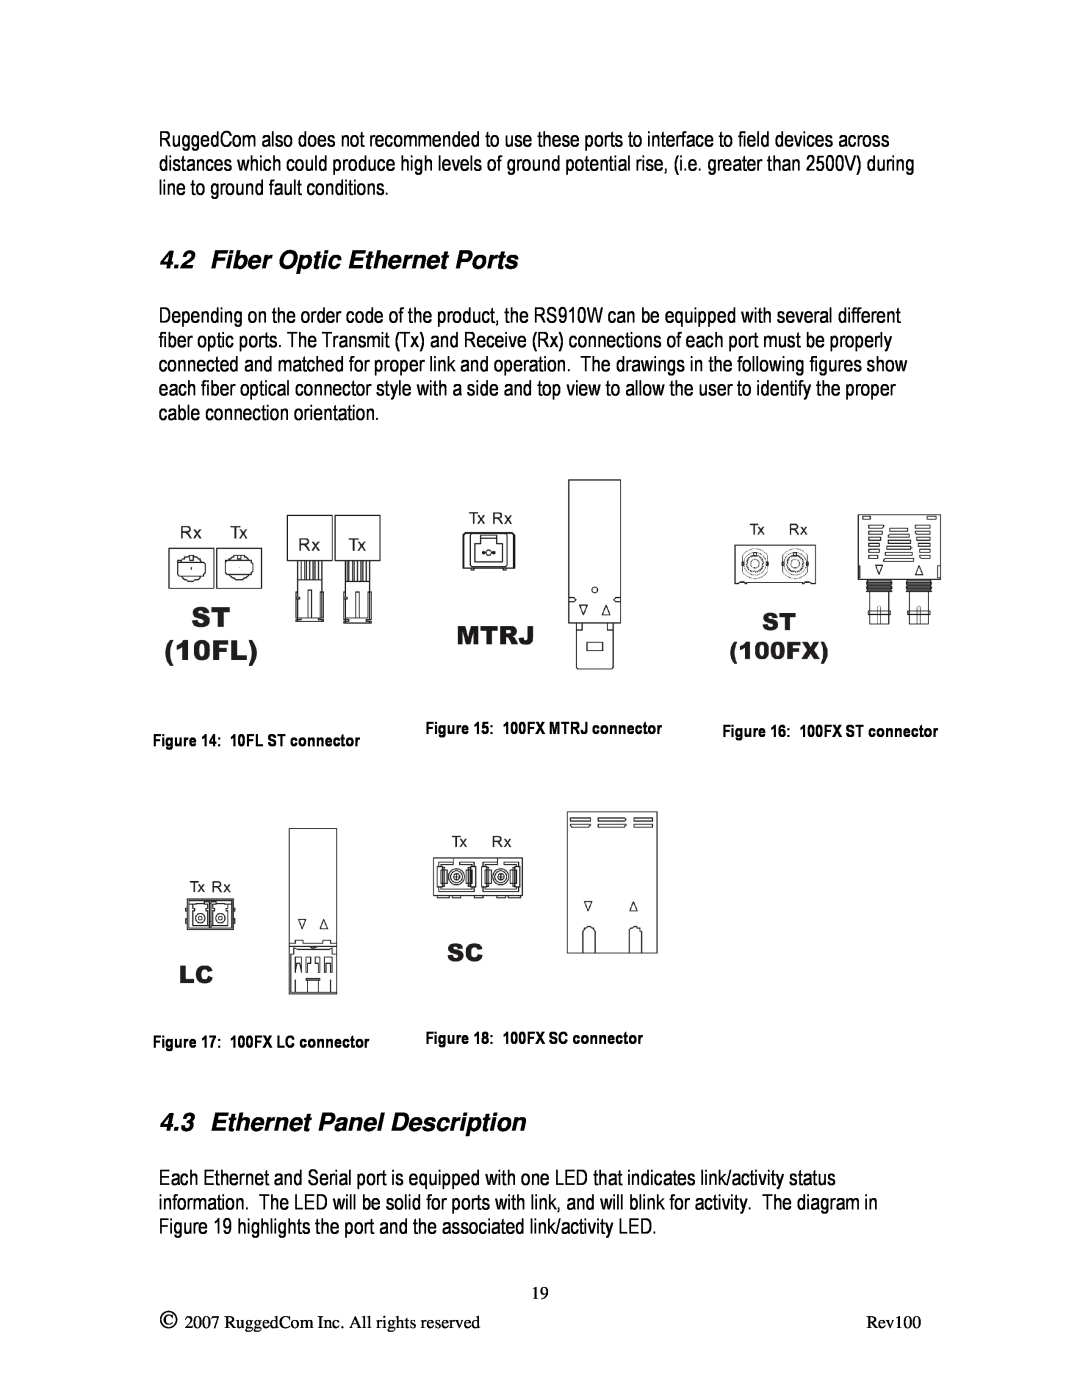 RuggedCom RS910W manual Fiber Optic Ethernet Ports, Ethernet Panel Description, 100FX MTRJ connector, 10FL ST connector 